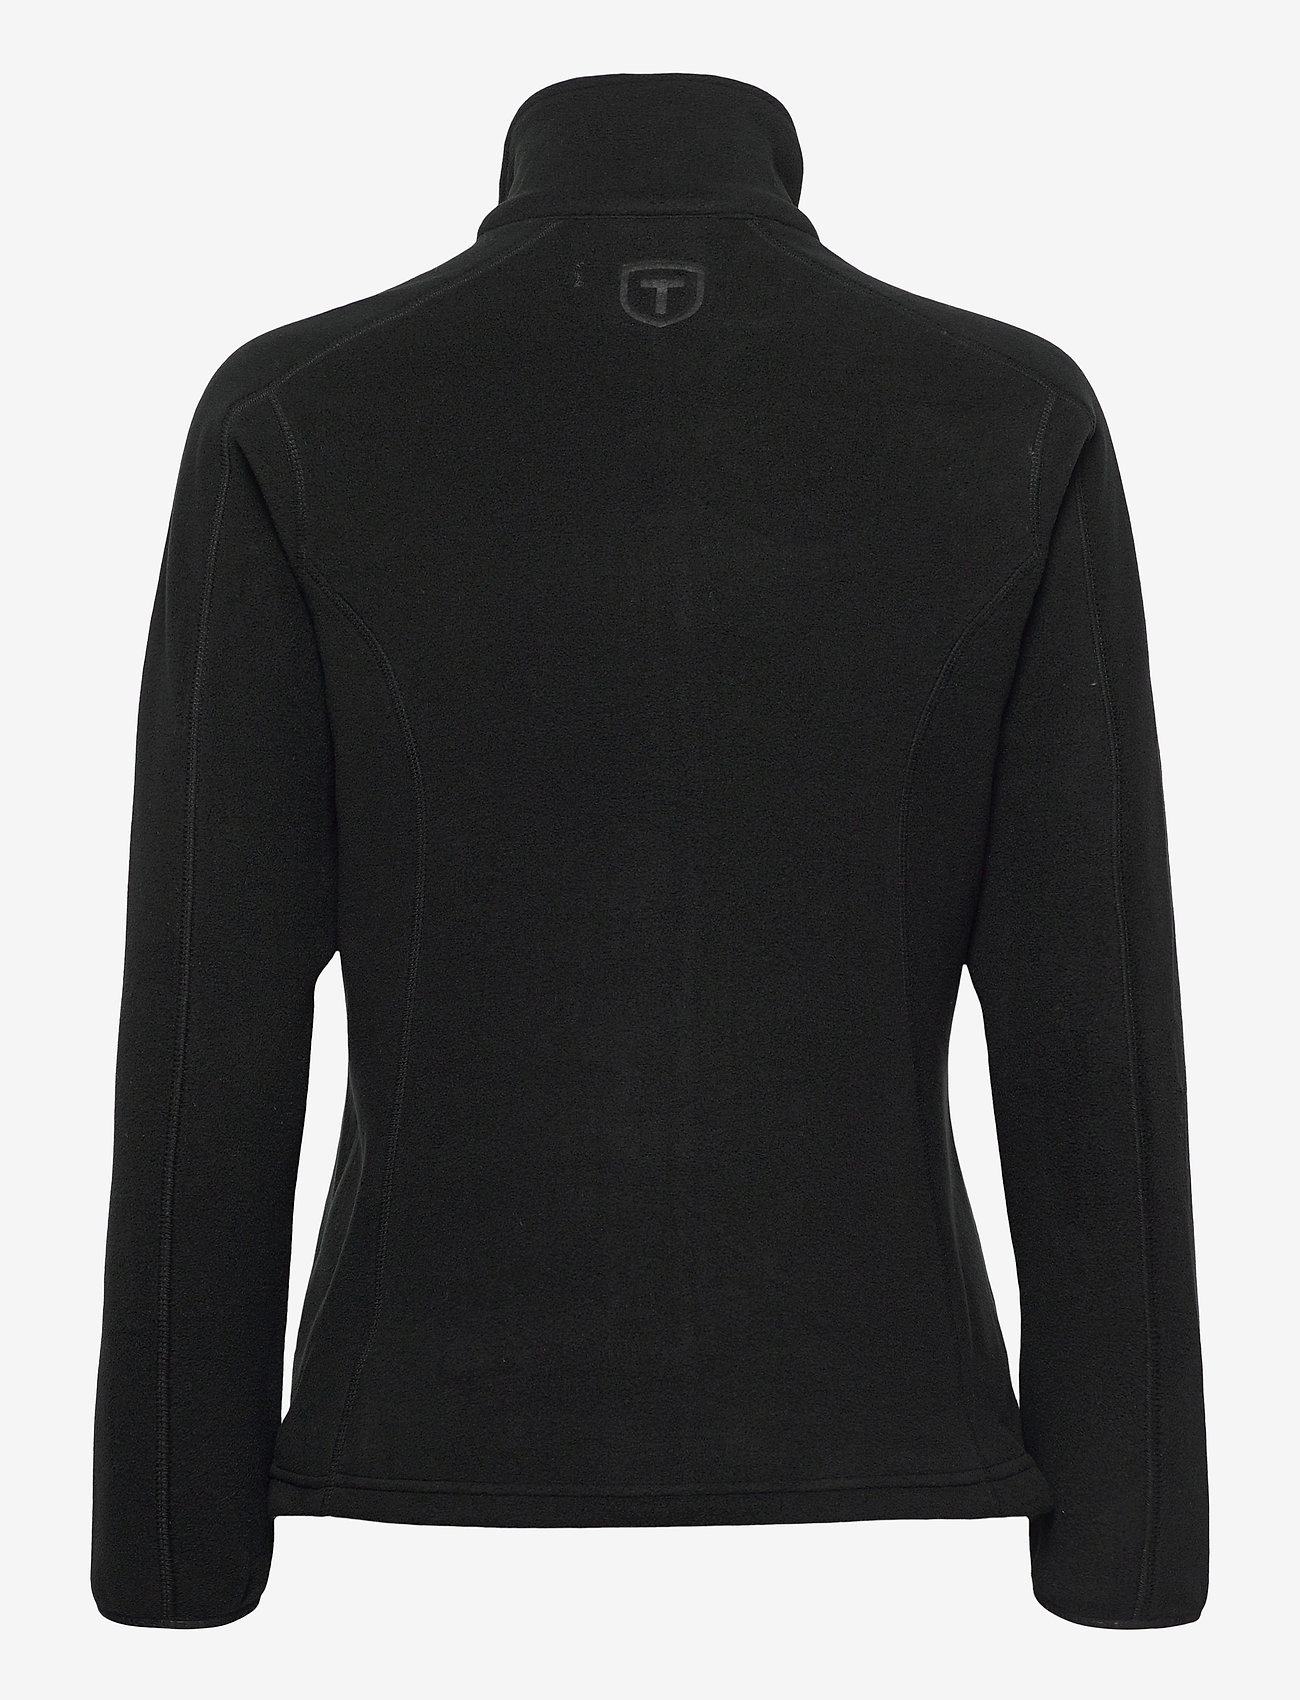 Tenson - Miracle Fleece - mid layer jackets - black - 1